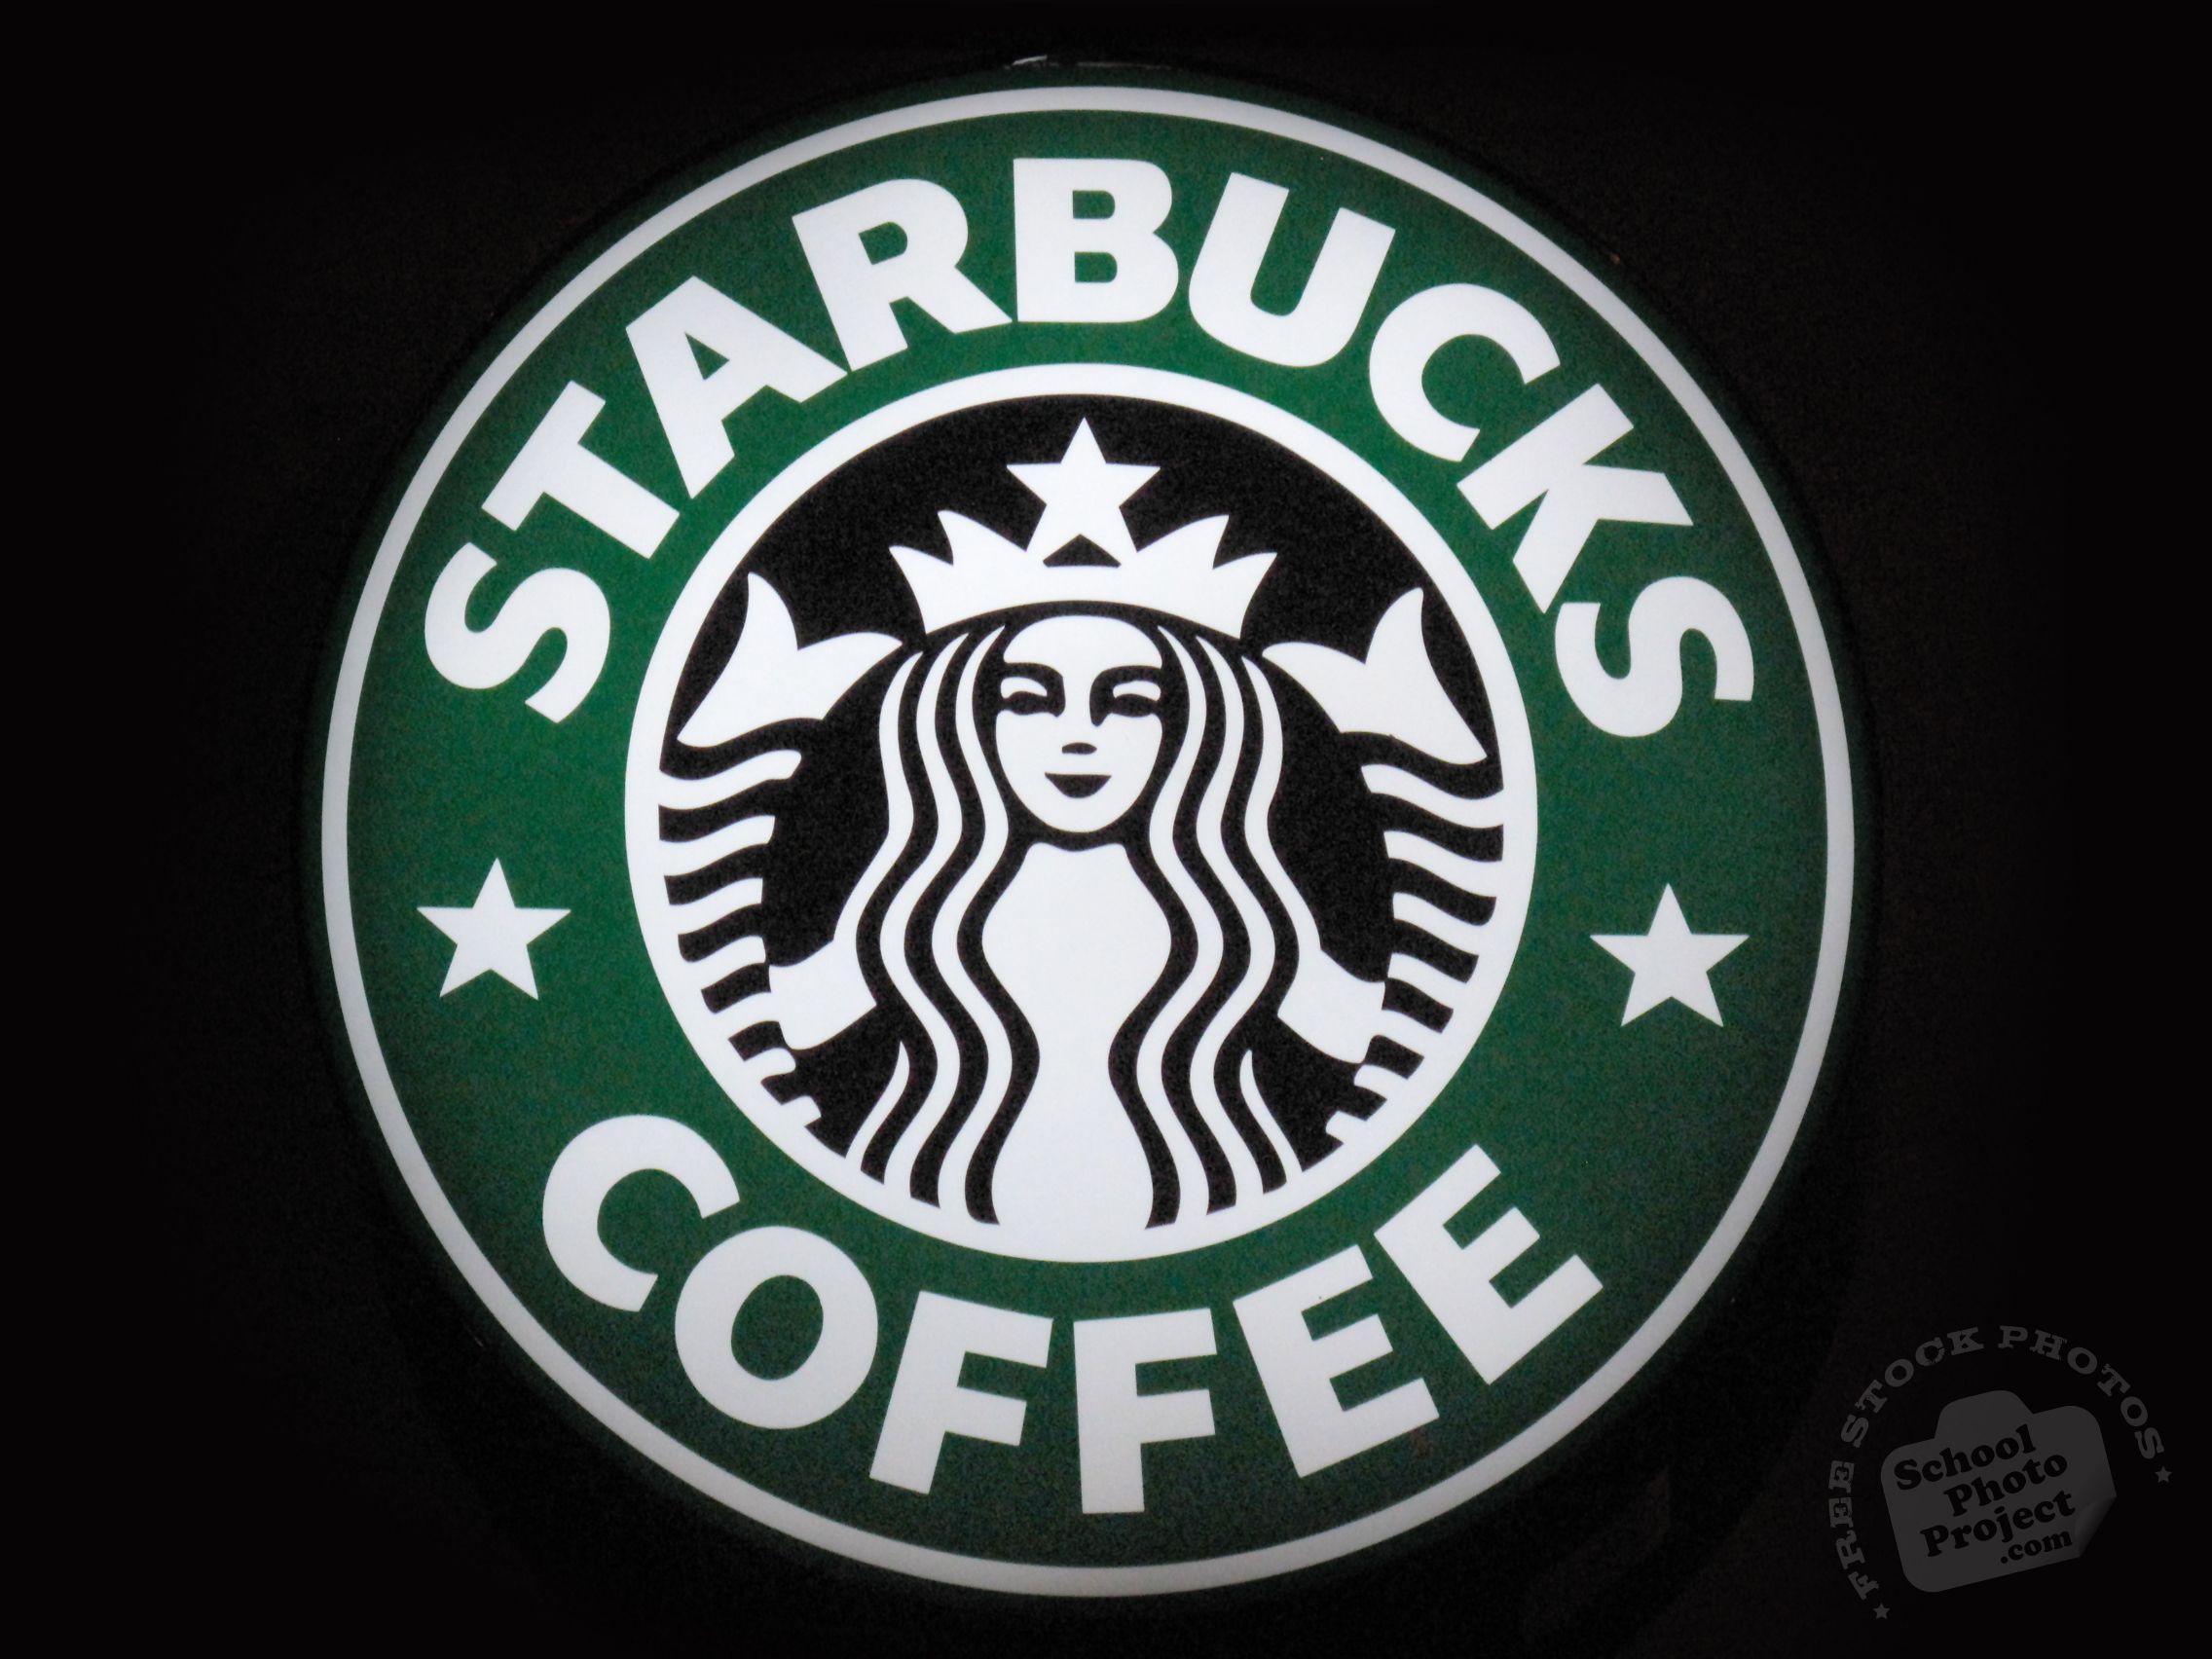 Popular Coffee Logo - FREE Starbucks Coffee Logo, Starbucks Identity, Popular Company's ...